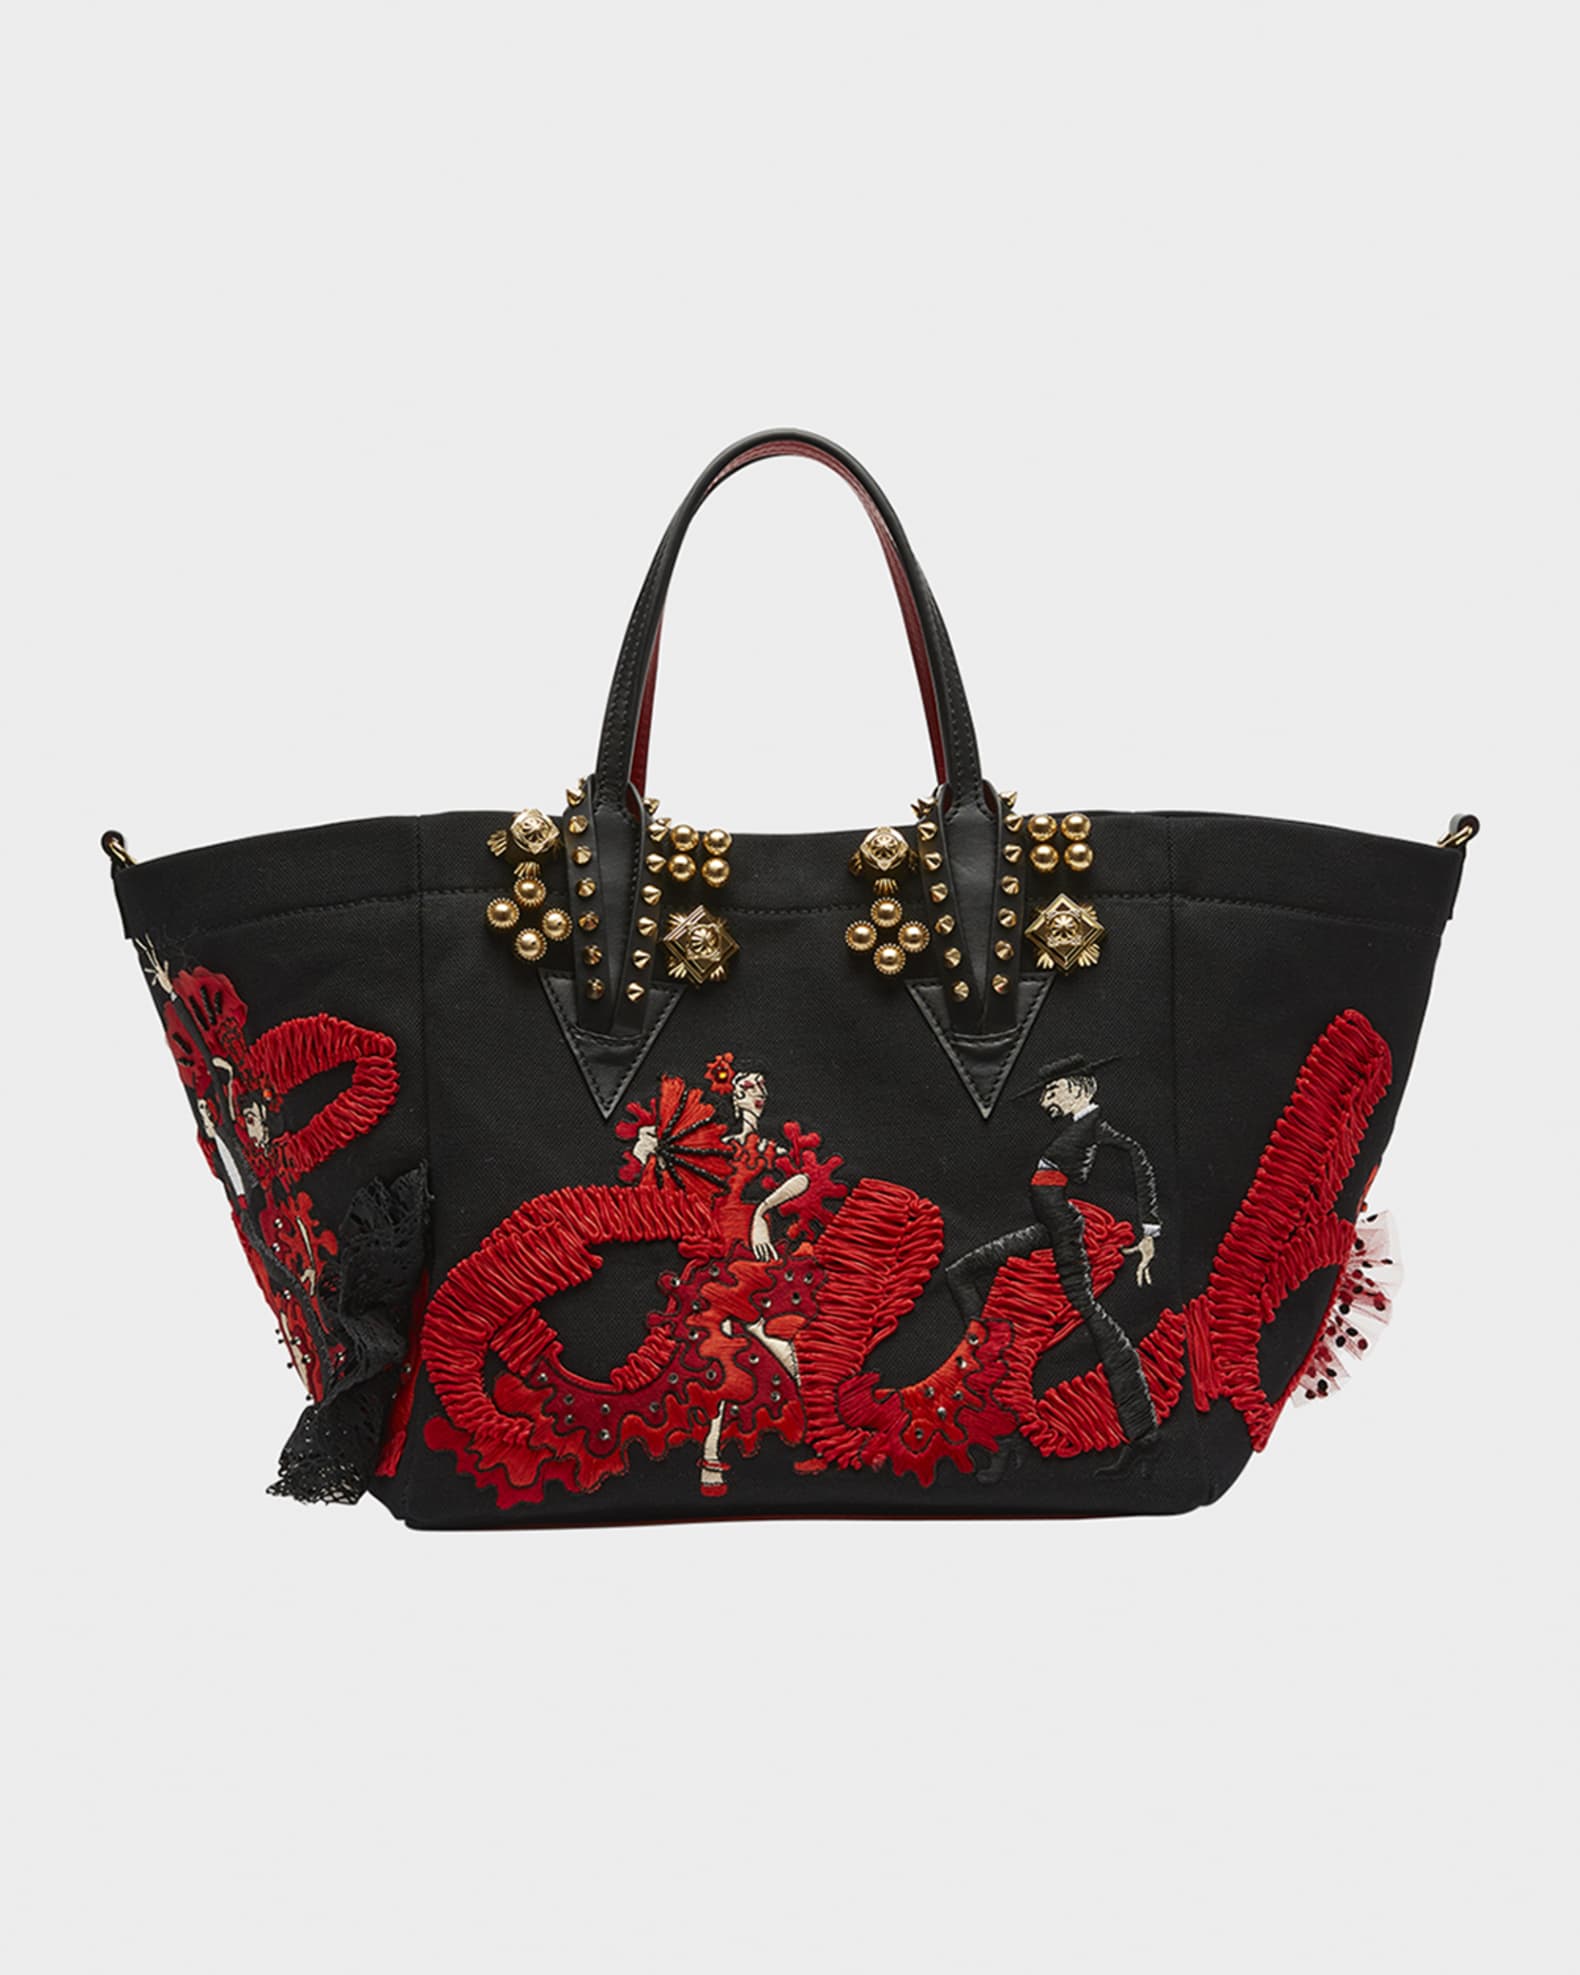 NEW Limited Edition Carolina Herrera Raffia Tote Bag